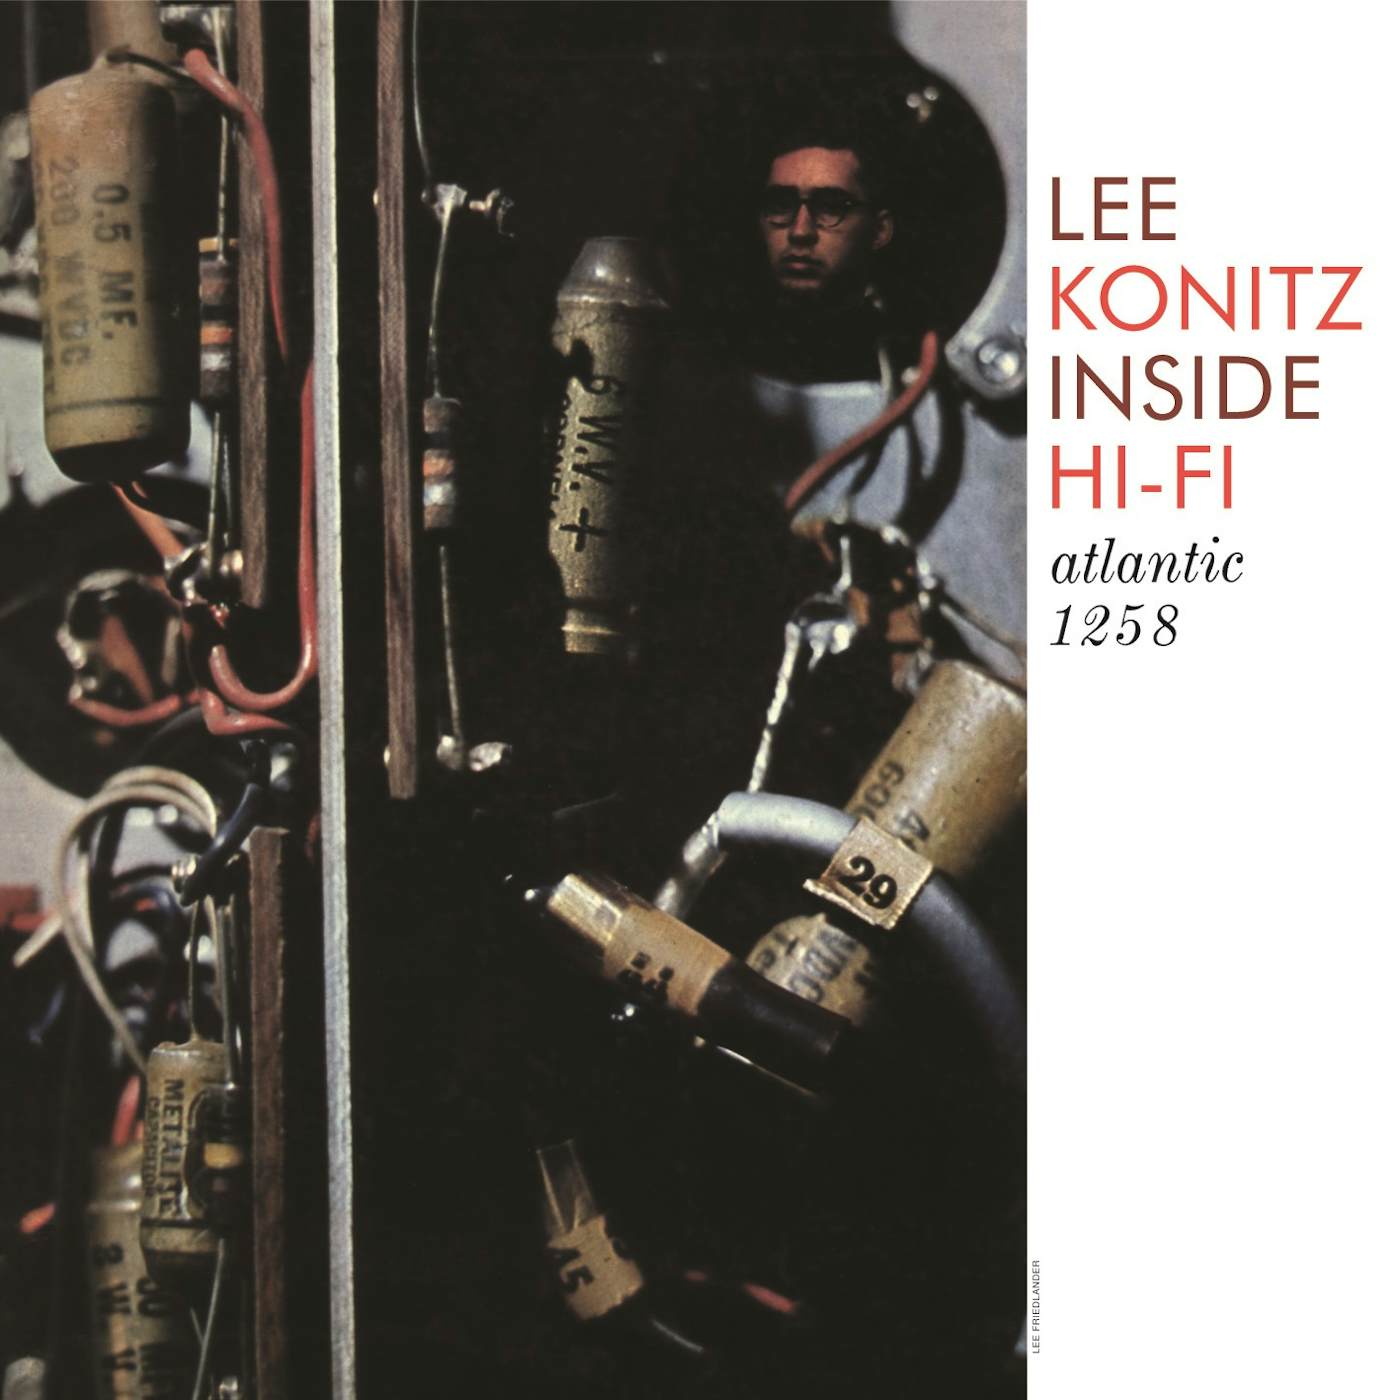 Lee Konitz Inside Hi-Fi Vinyl Record